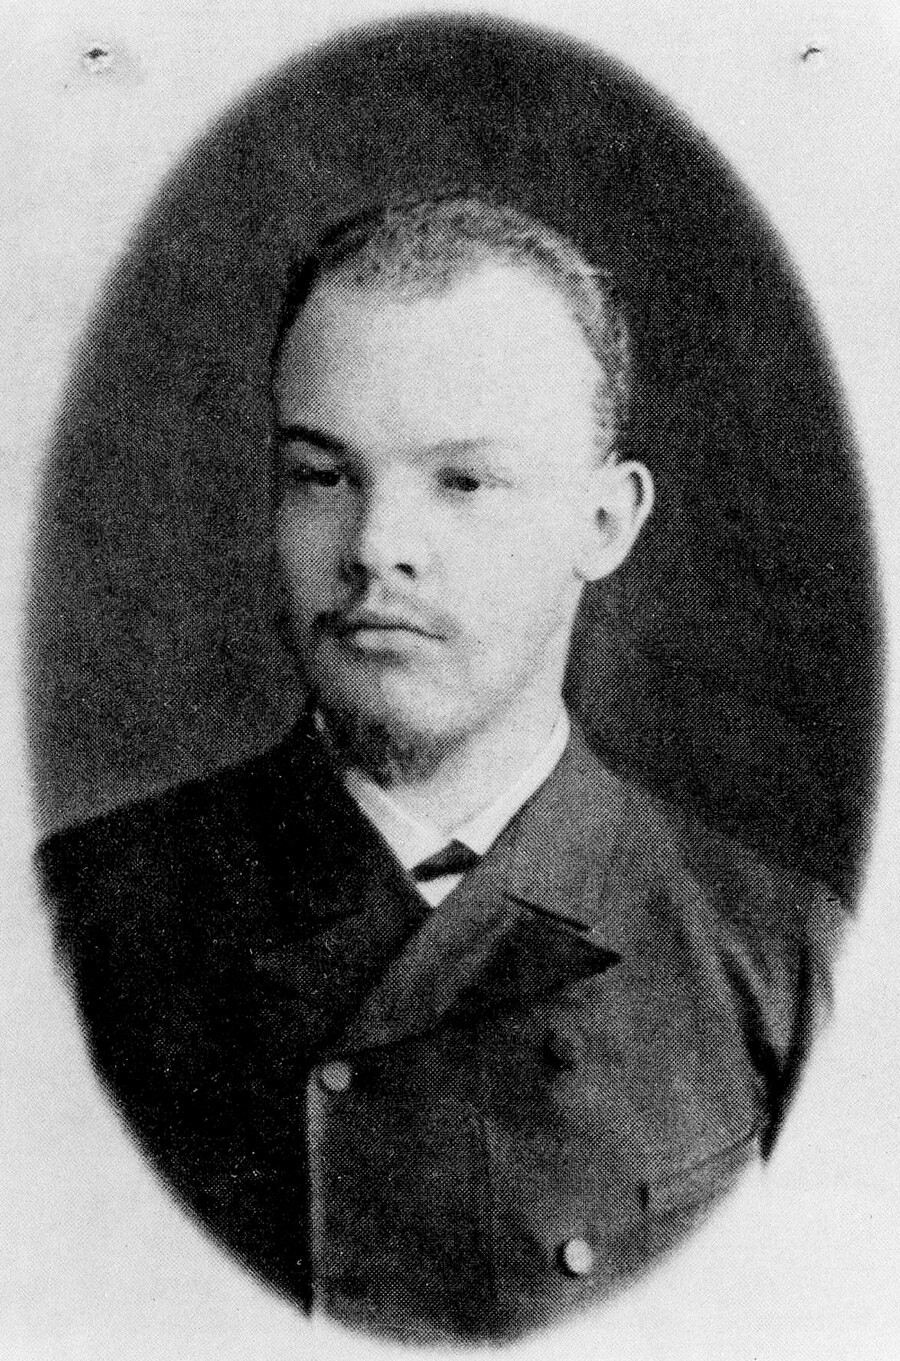 Vladimir Lenin in 1891